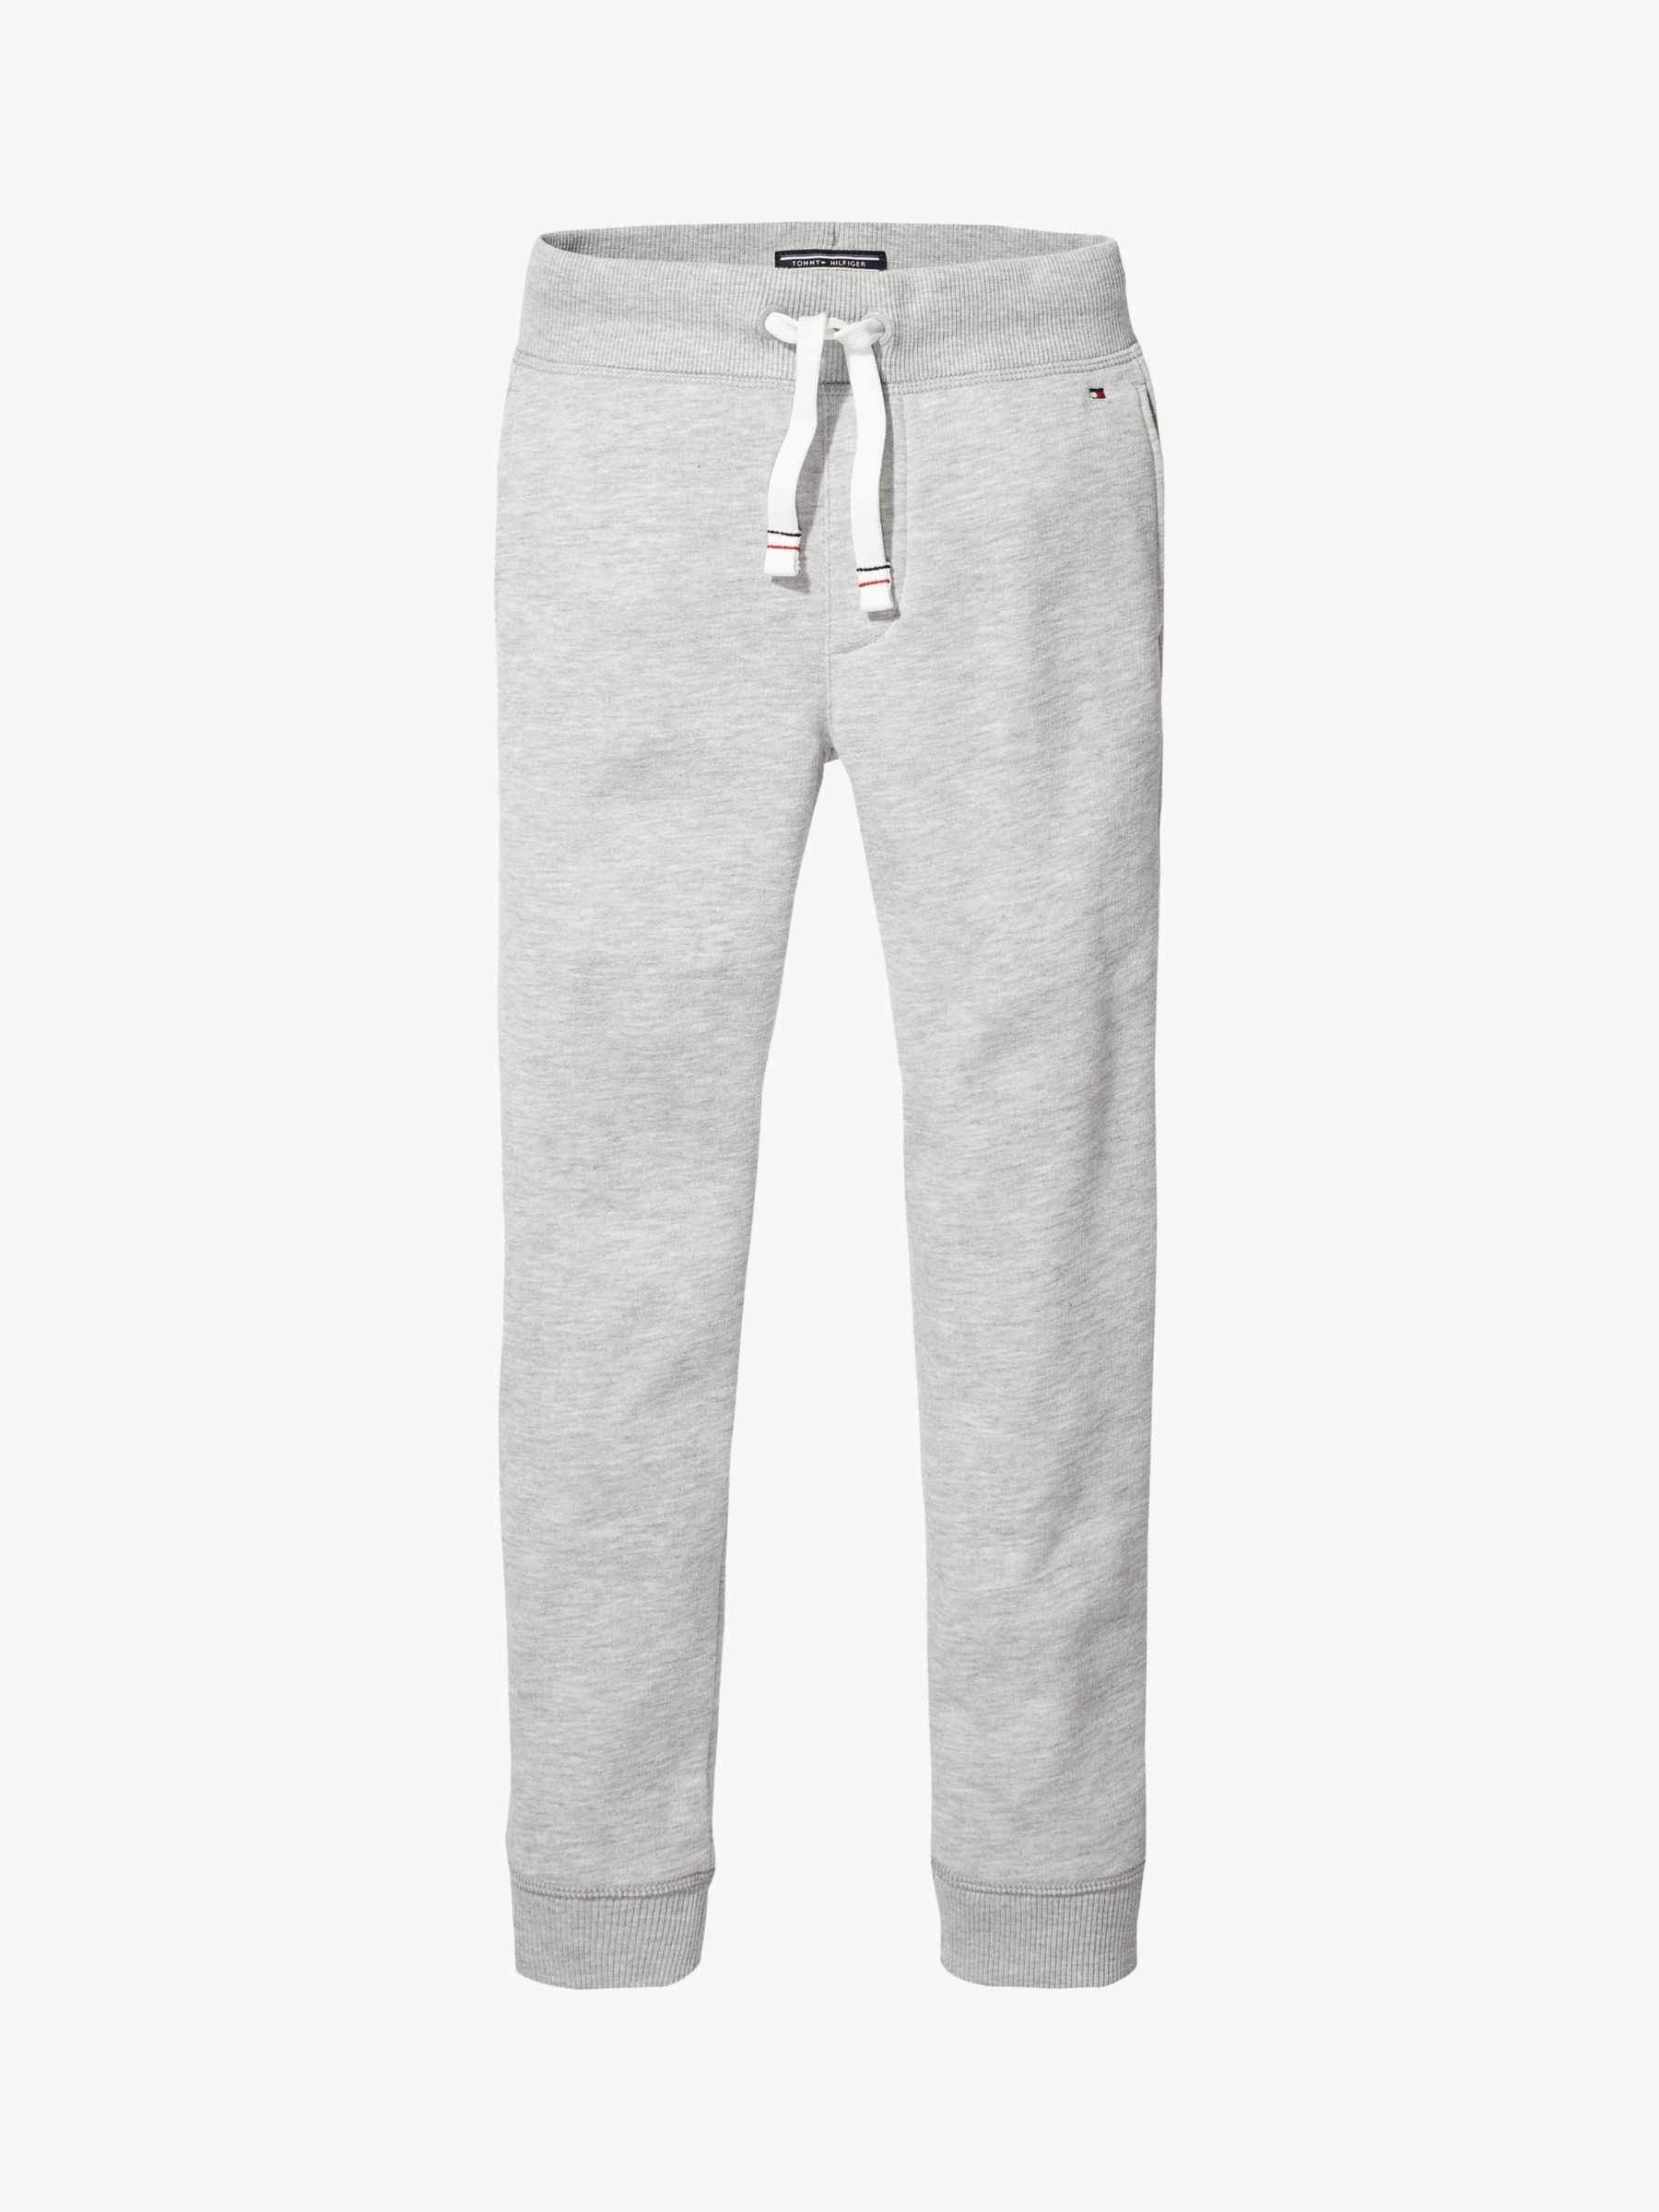 Image of Tommy Hilfiger Boys Basic Sweatpants Grey